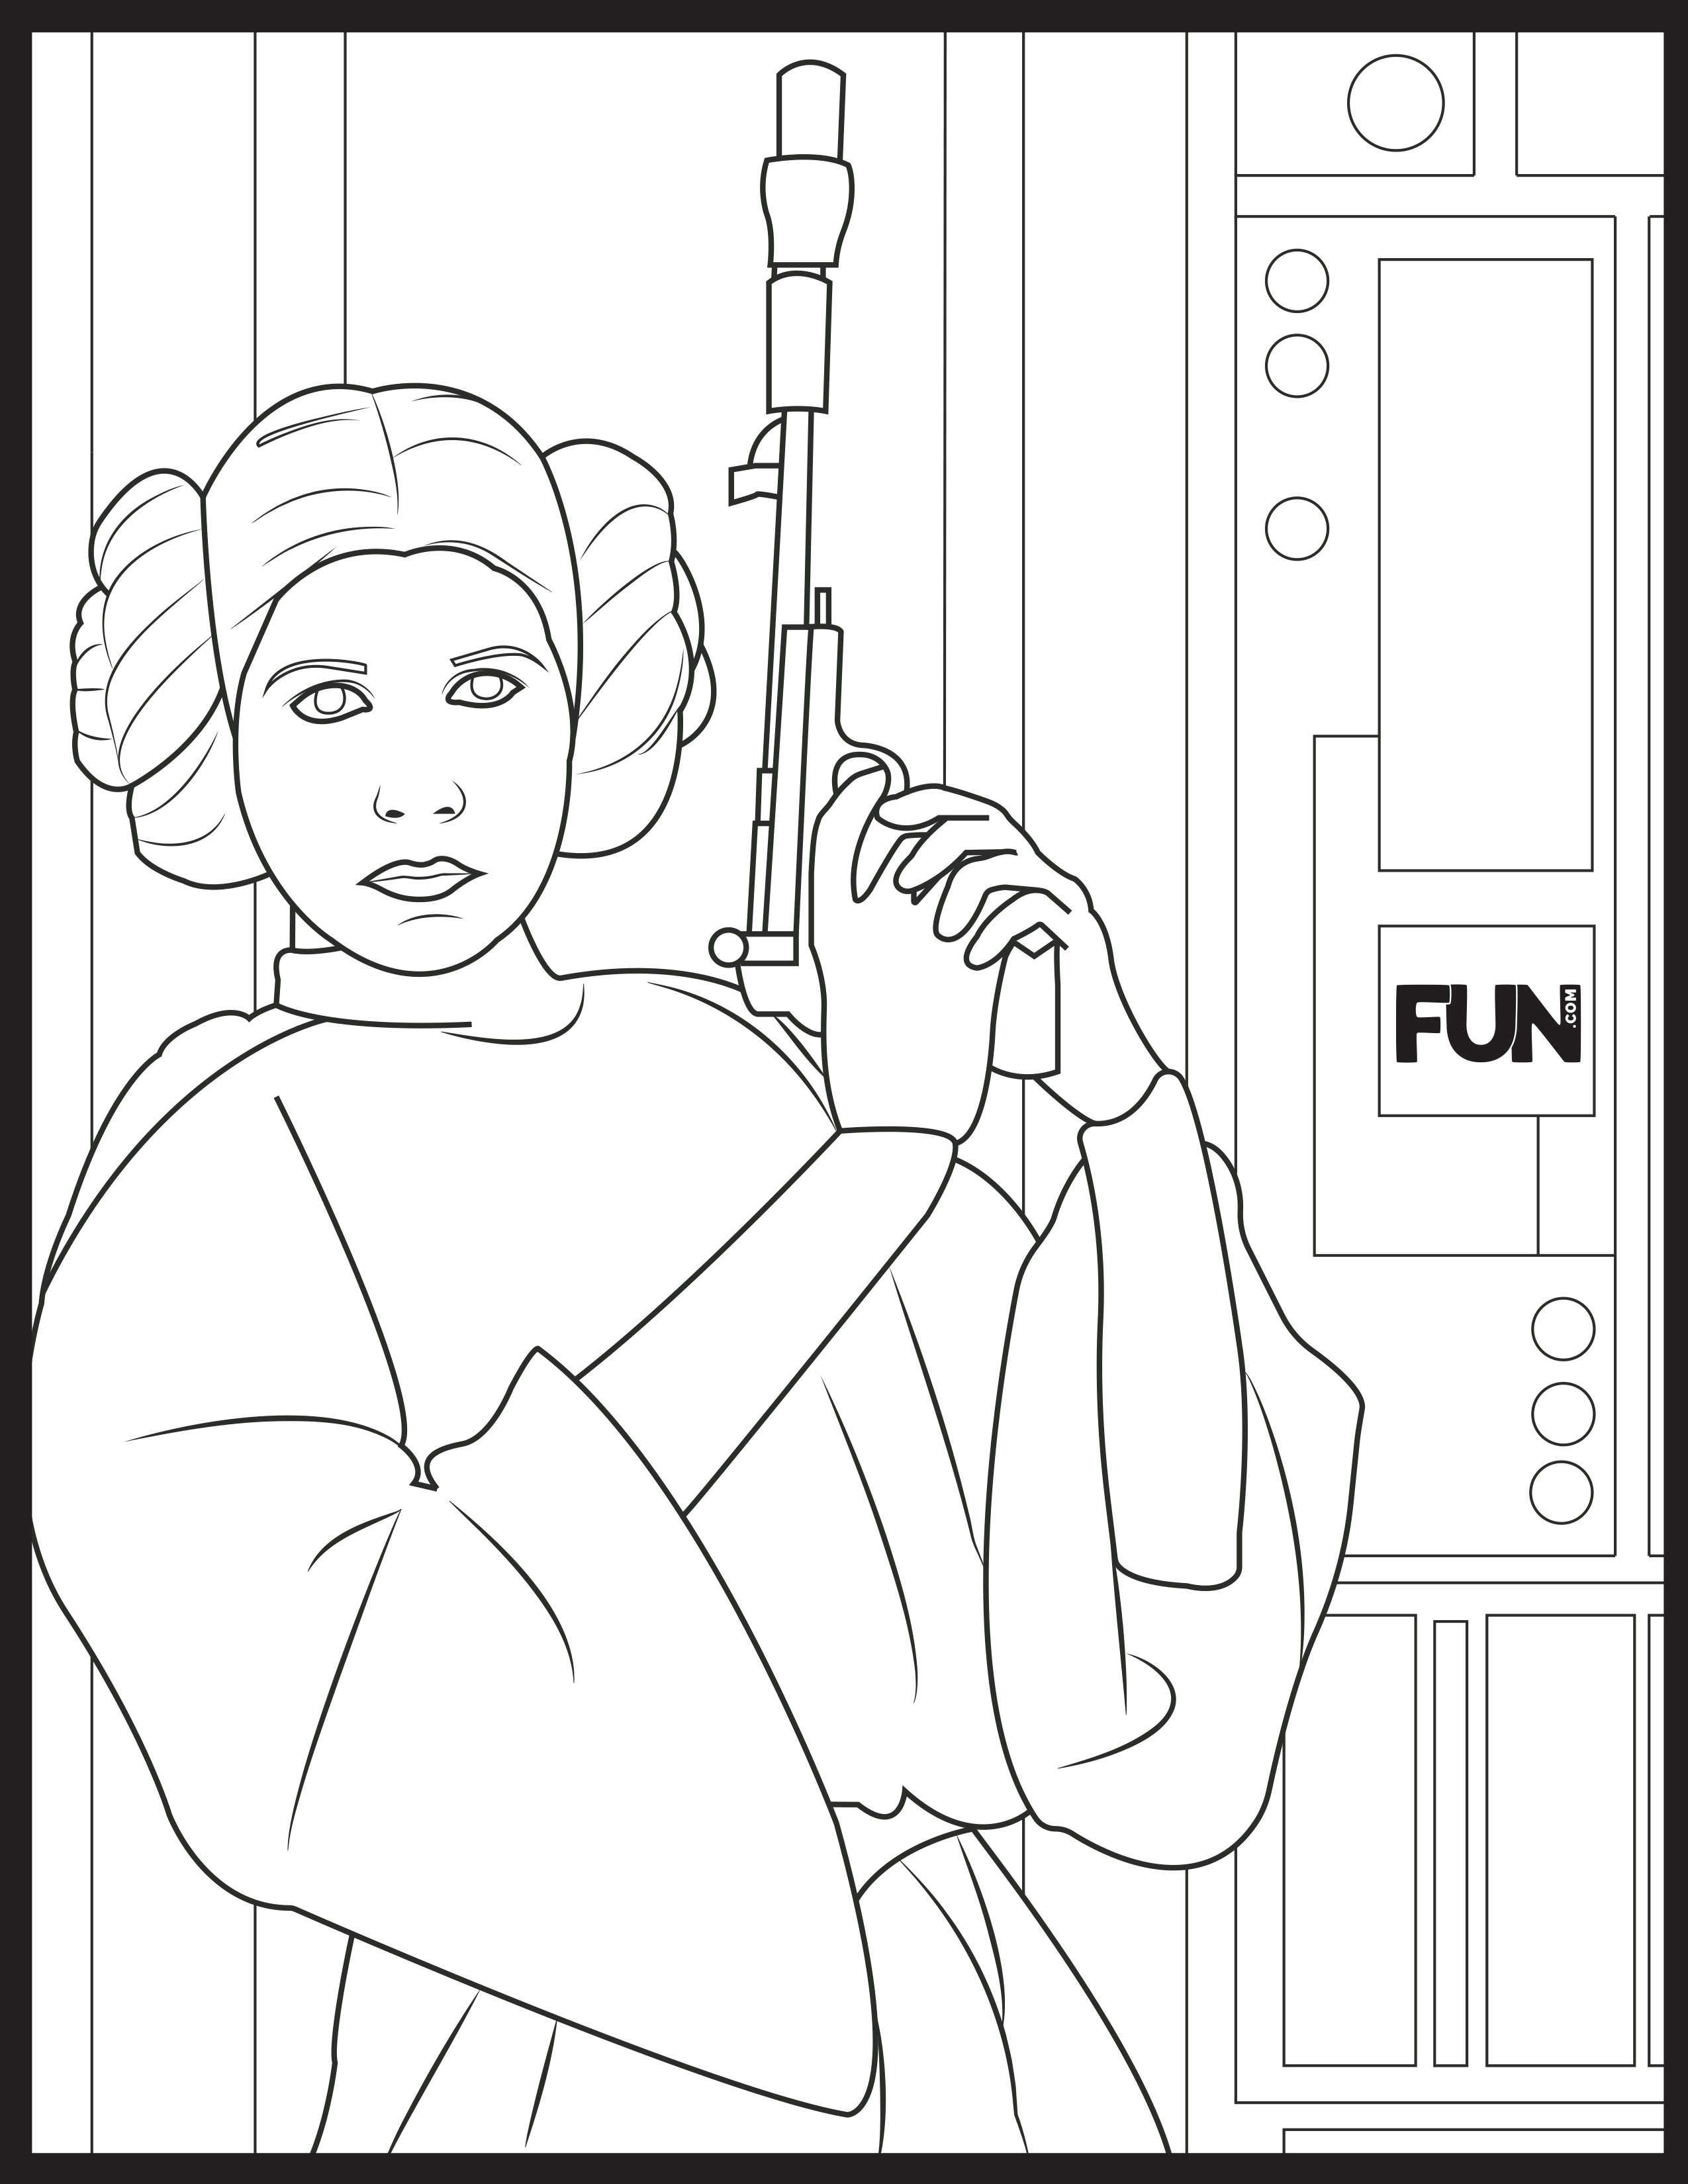 Princess Leia coloring page